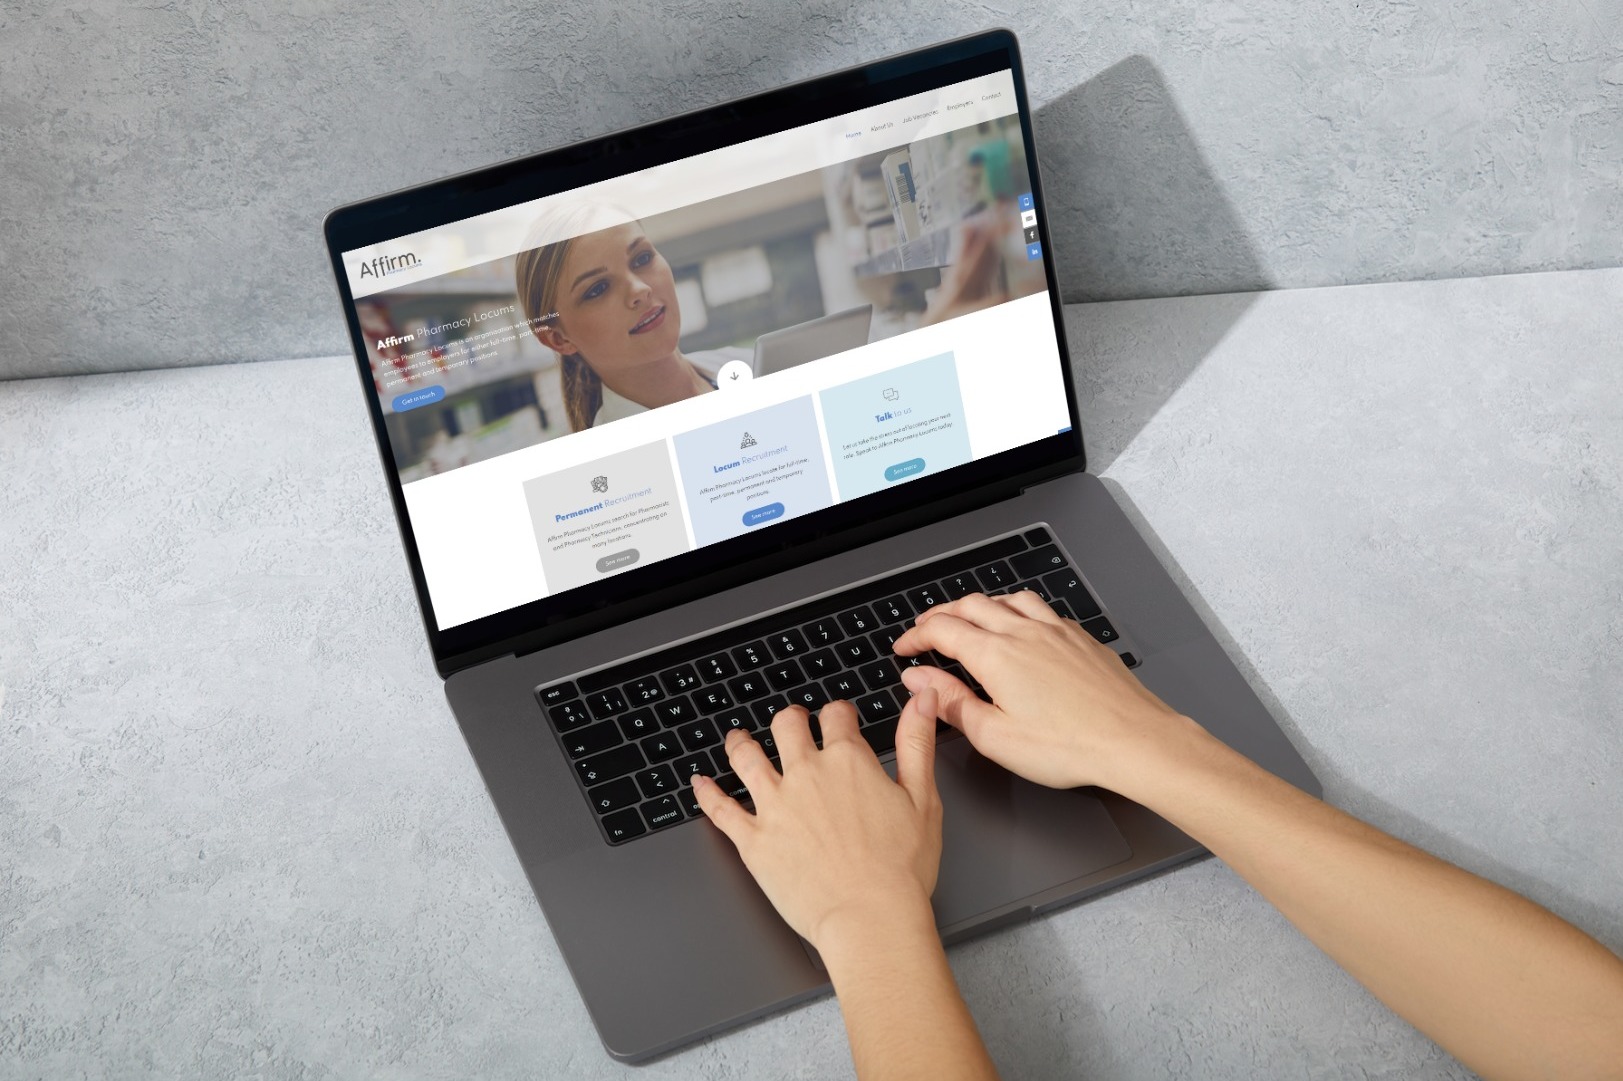 Affirm website shown on a laptop screen